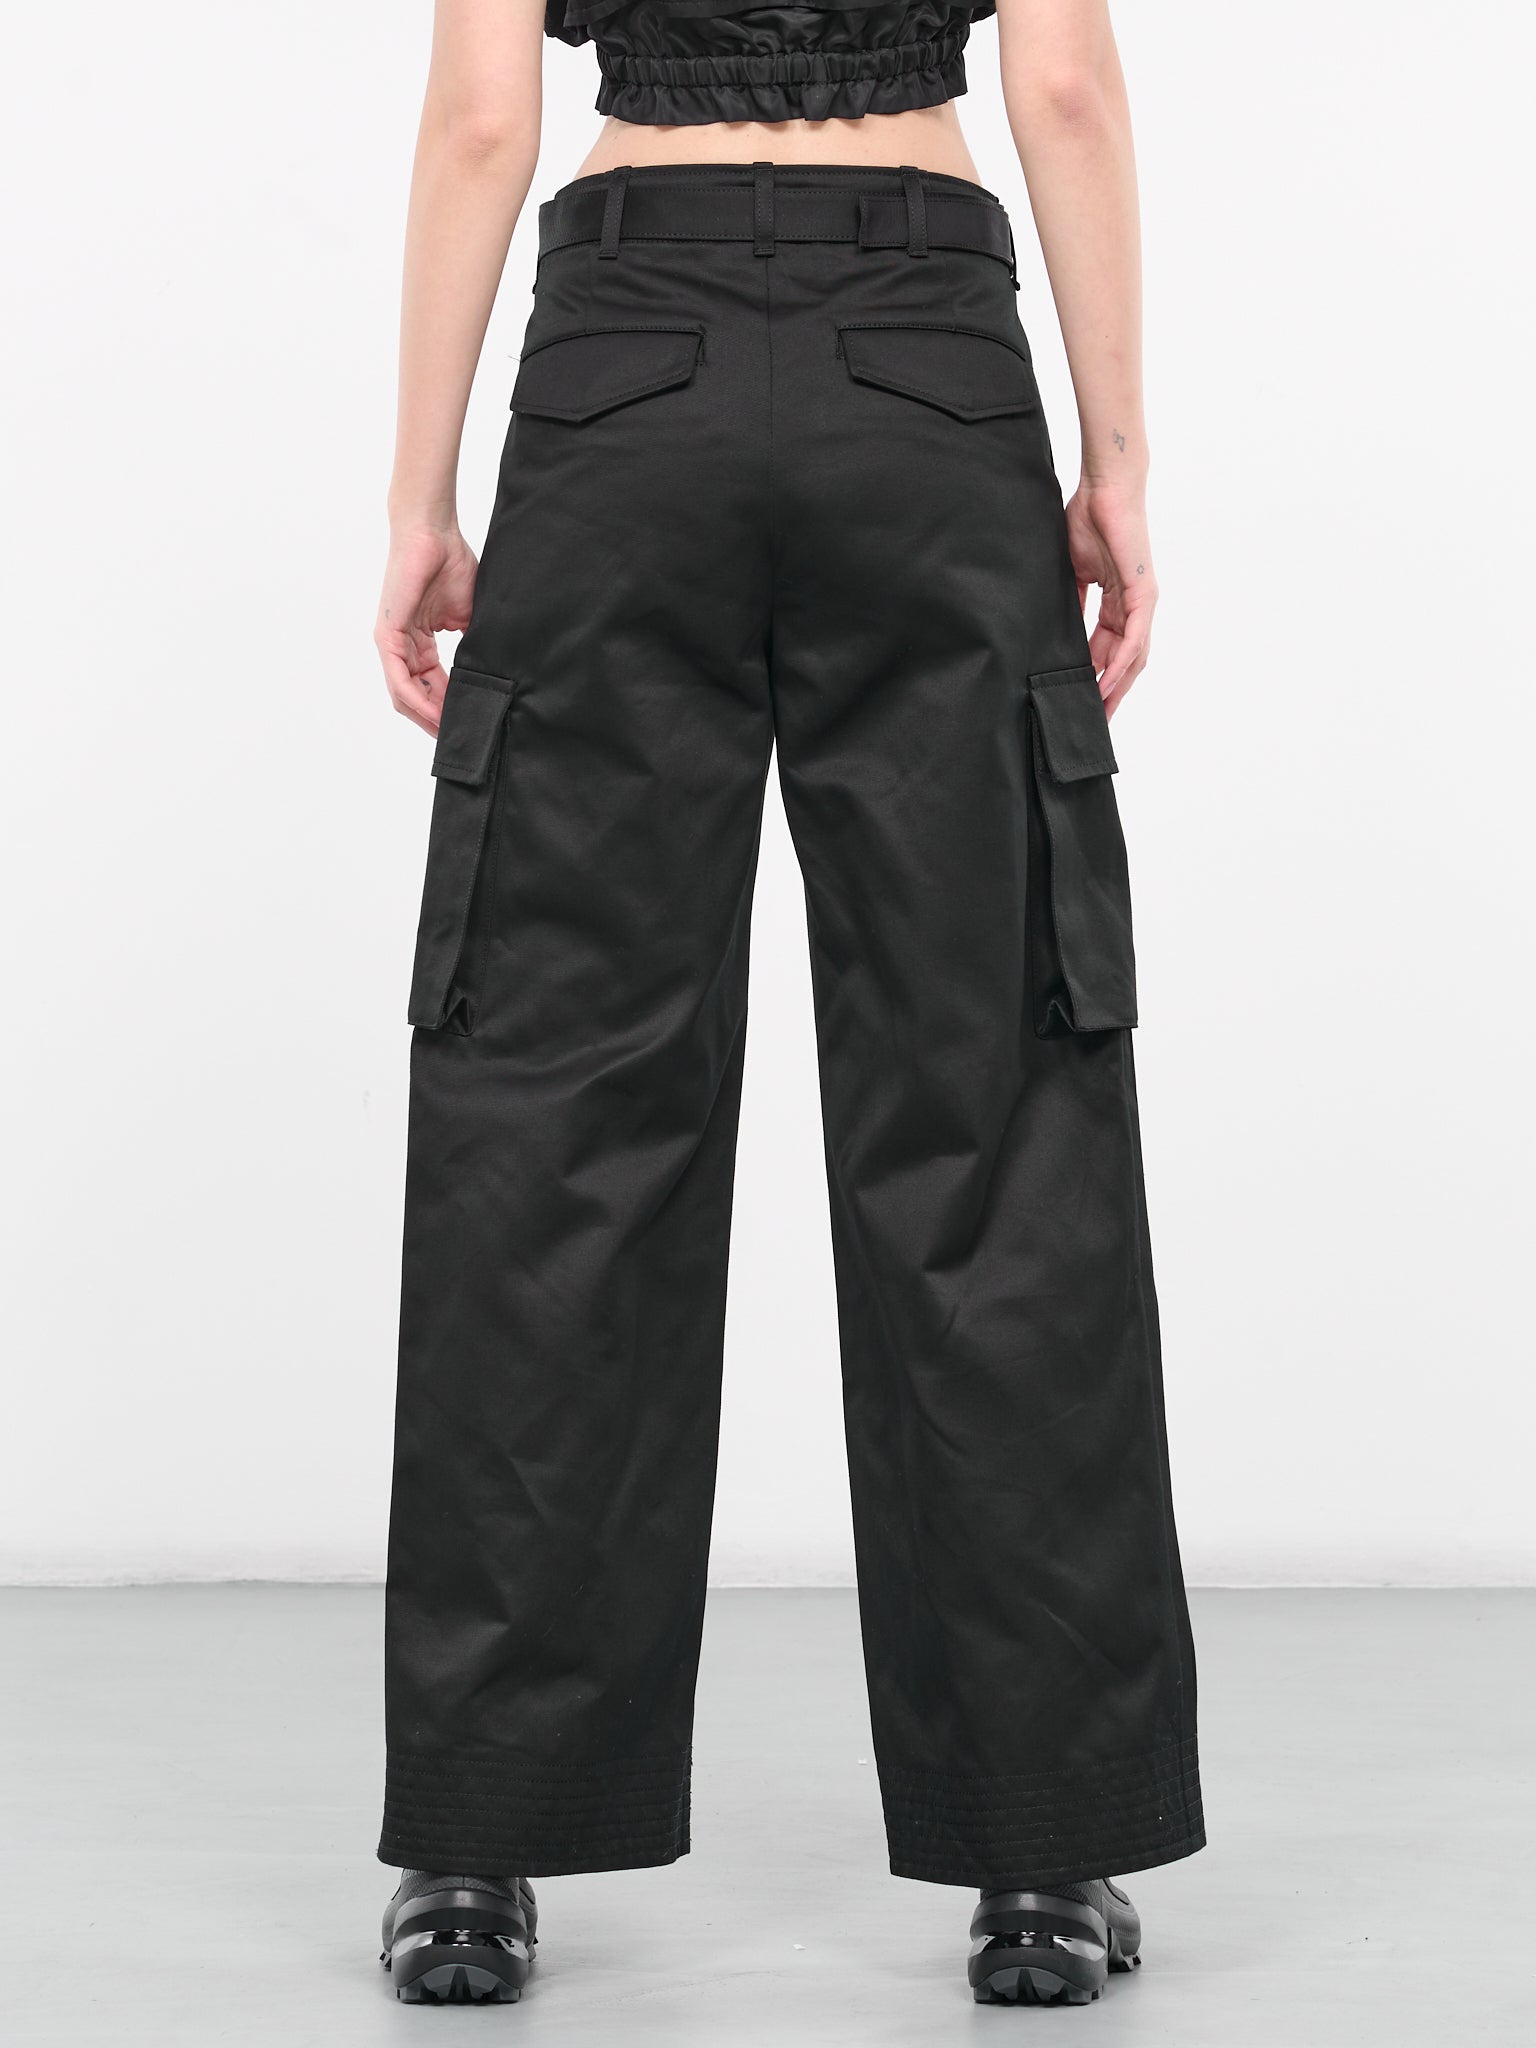 Belted Cargo Pants (24-07078-001-BLACK)